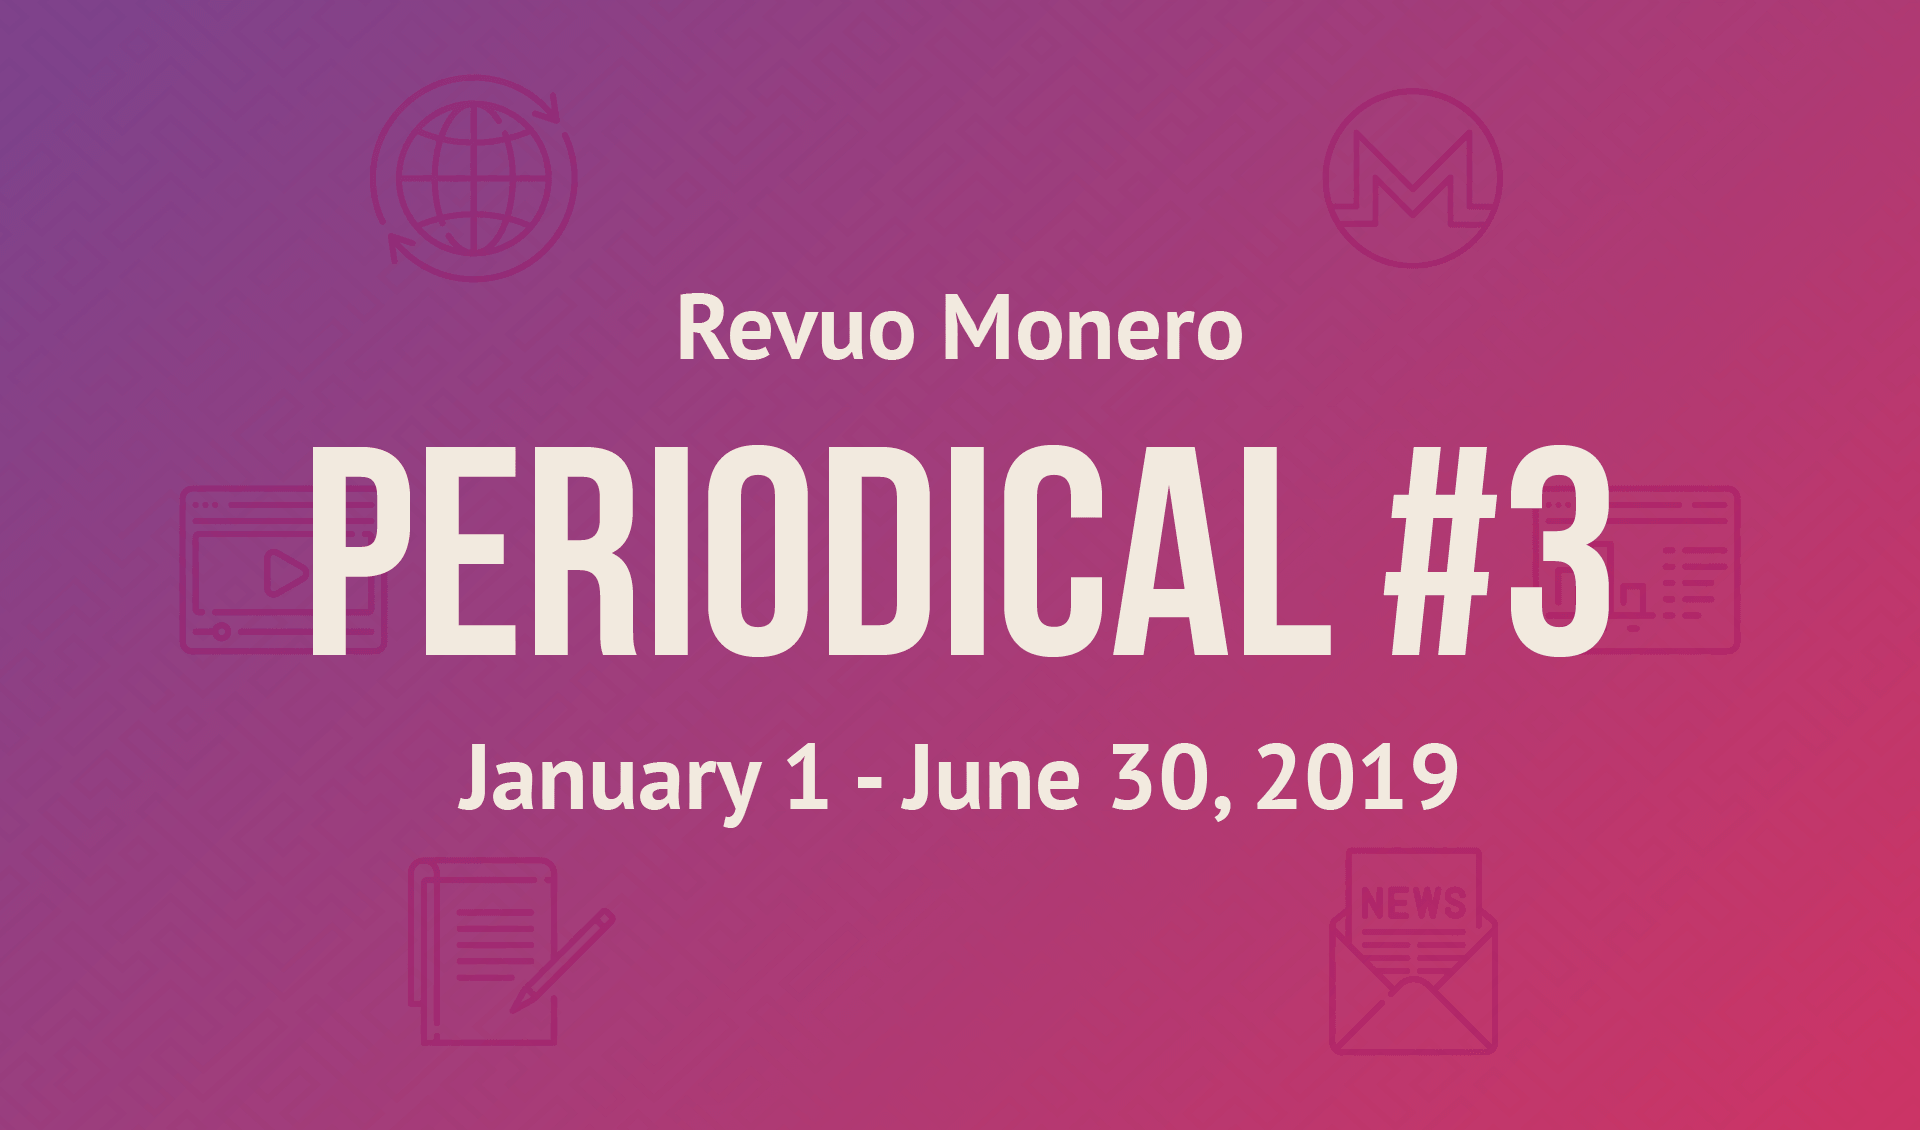 Revuo Monero Periodical #3 Slide